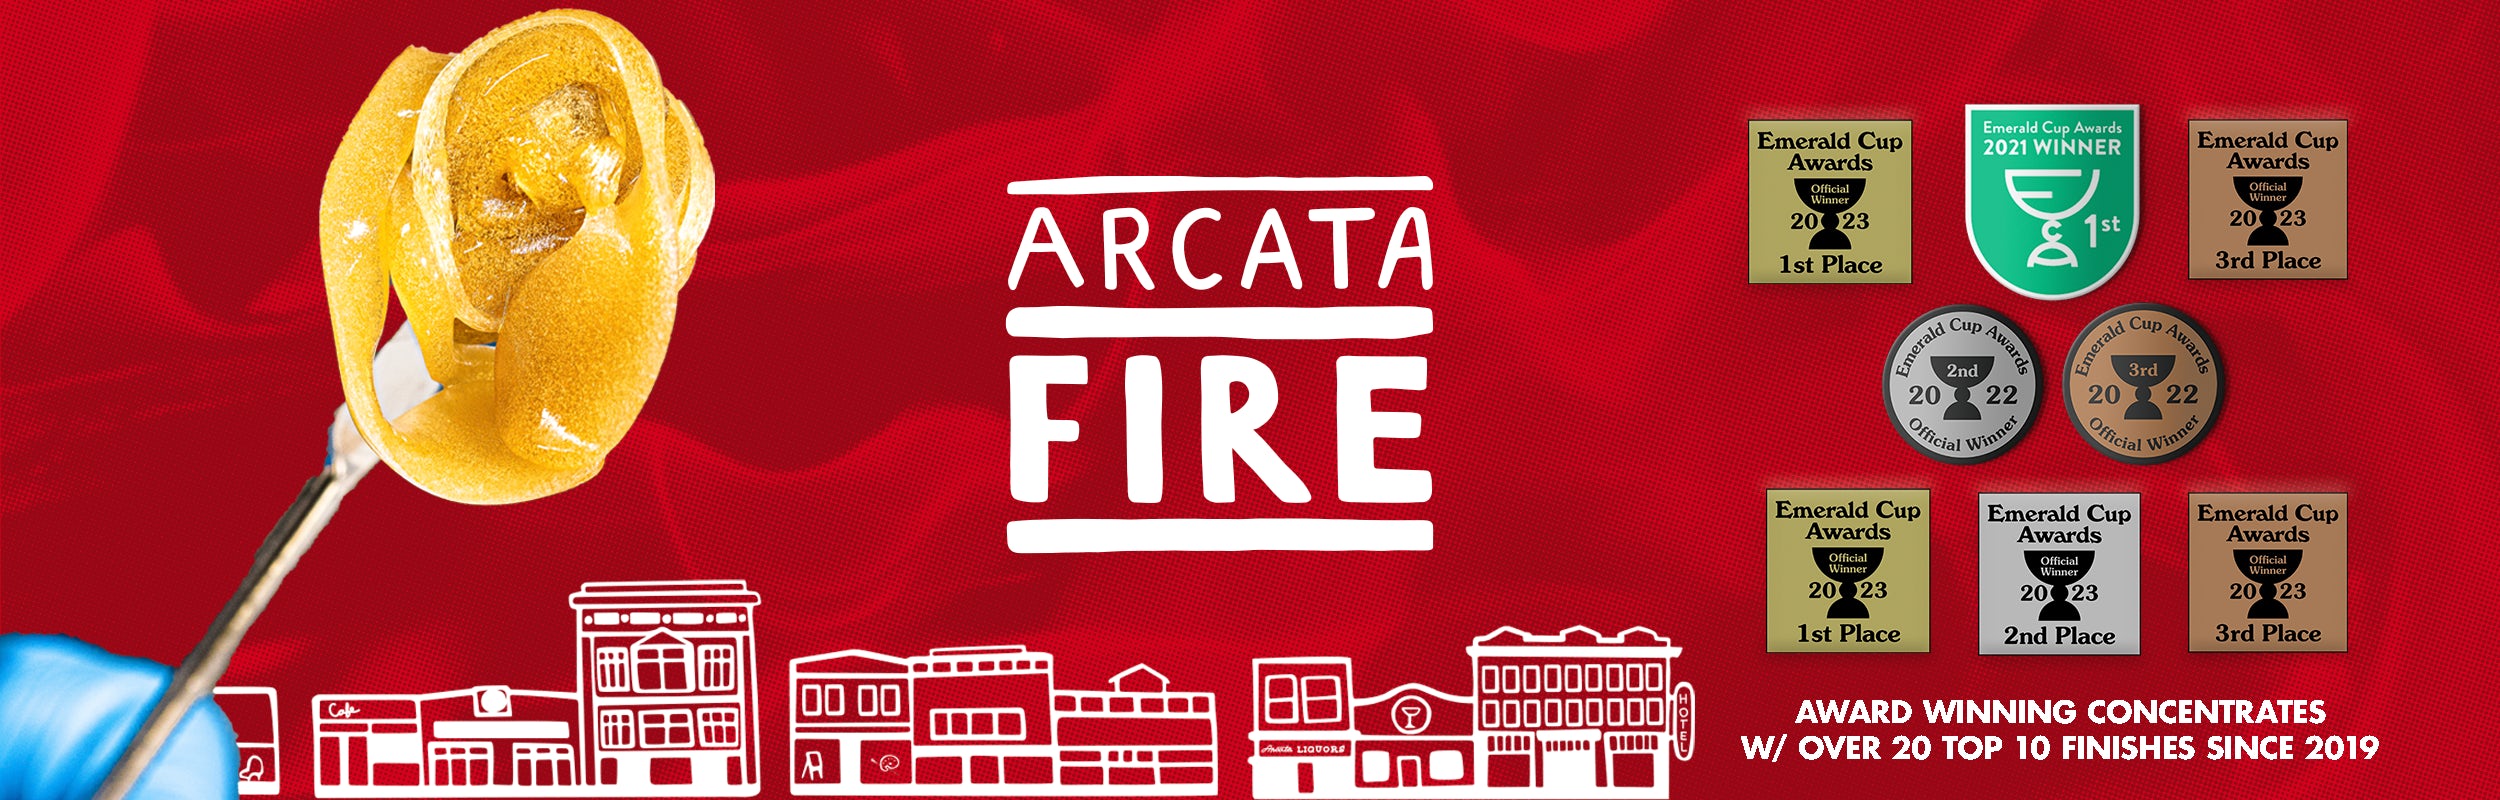 Arcata Fire banner